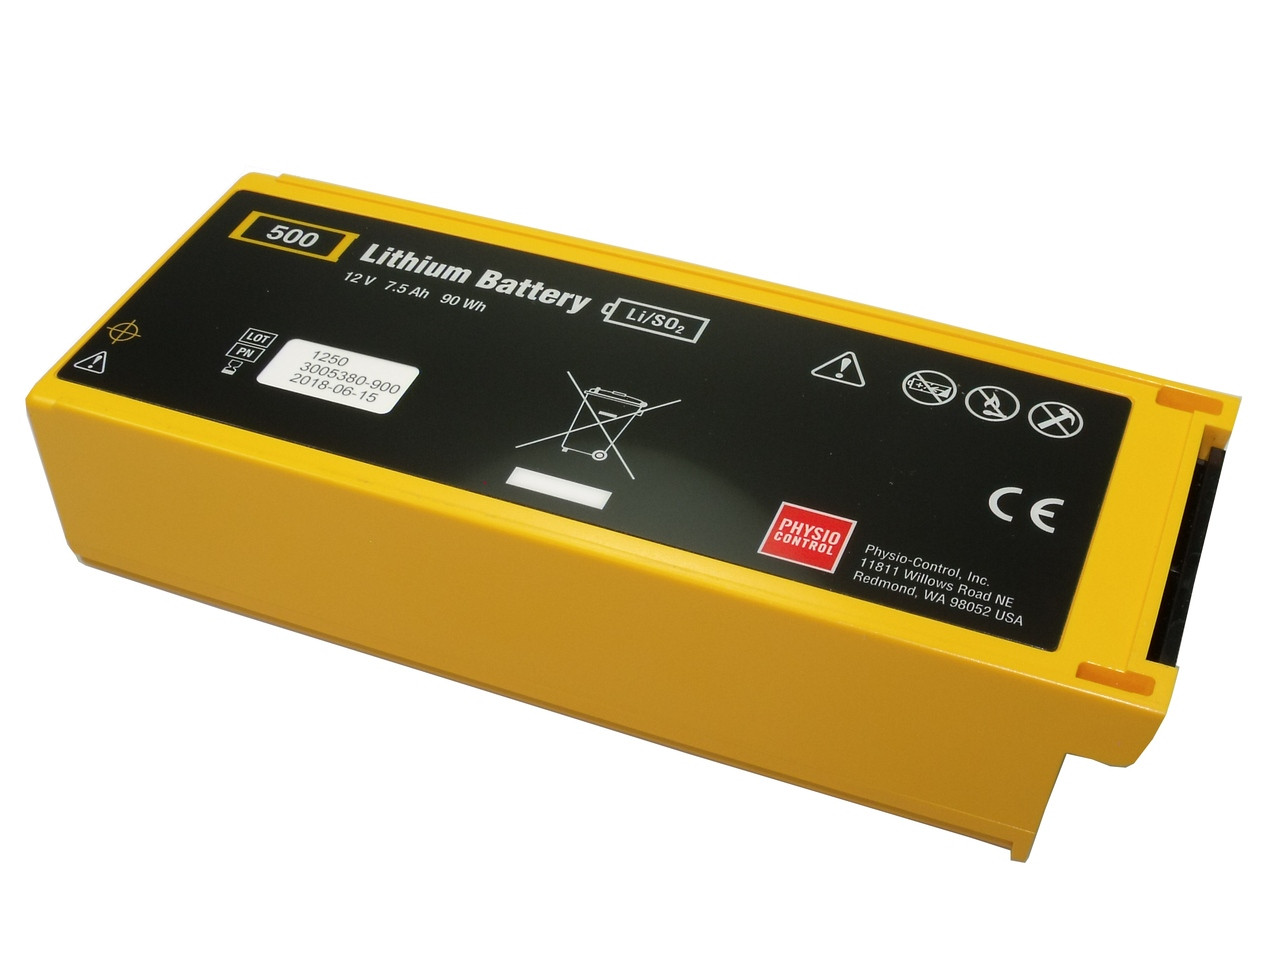 Physio-Control LifePak LP500 Monitor Defibrillator Battery (Non-Rechargeable)